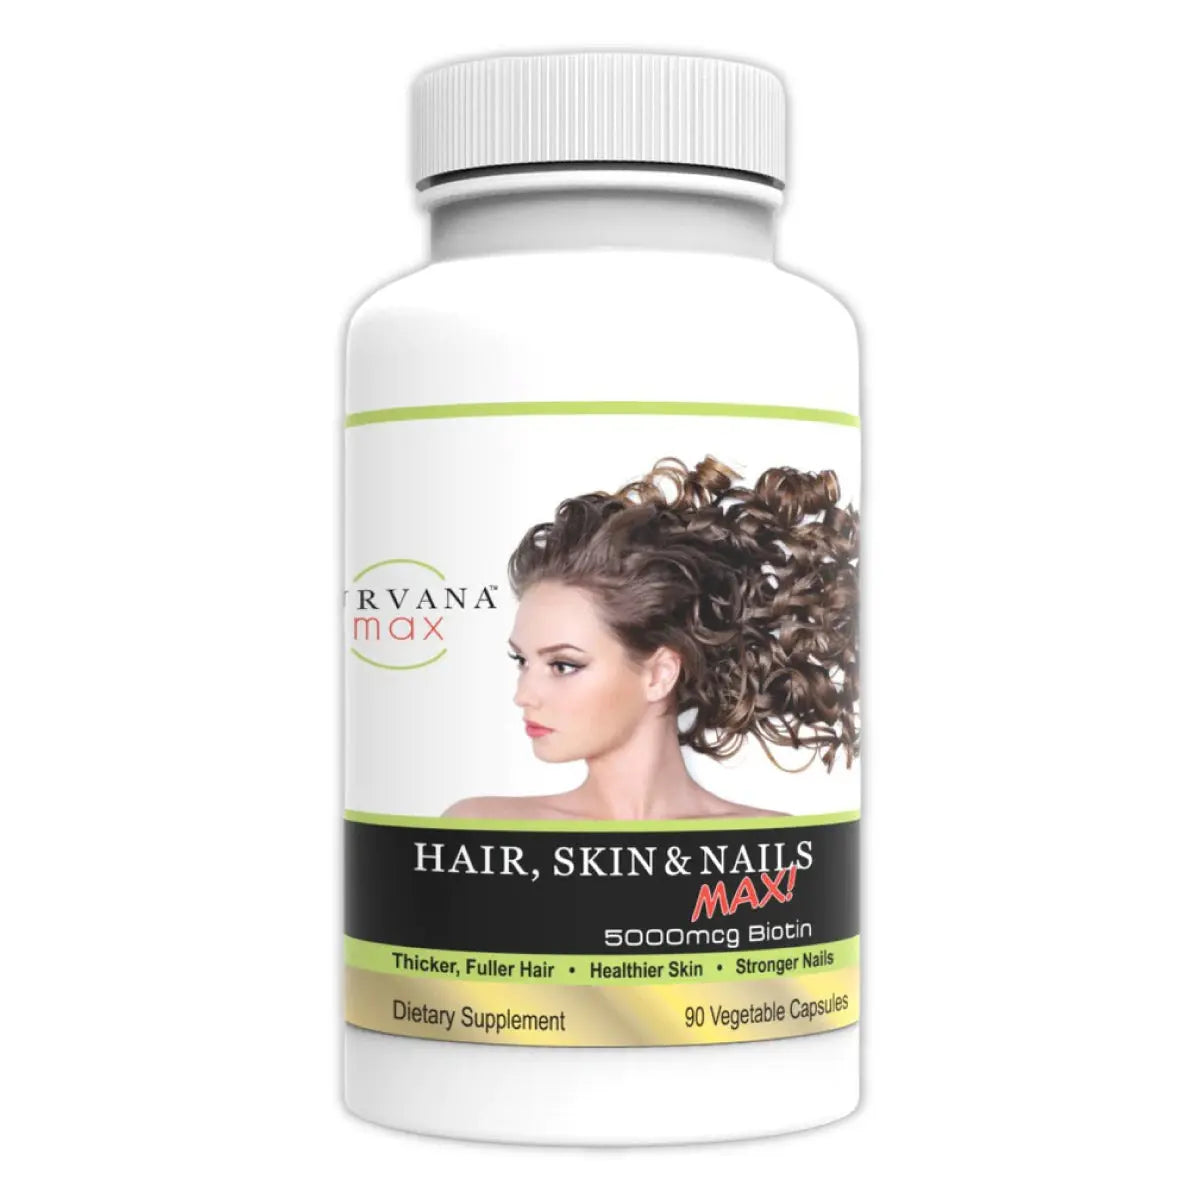 PURVANA HAIR - SKIN - NAILS Optimal Nutrition & Supps